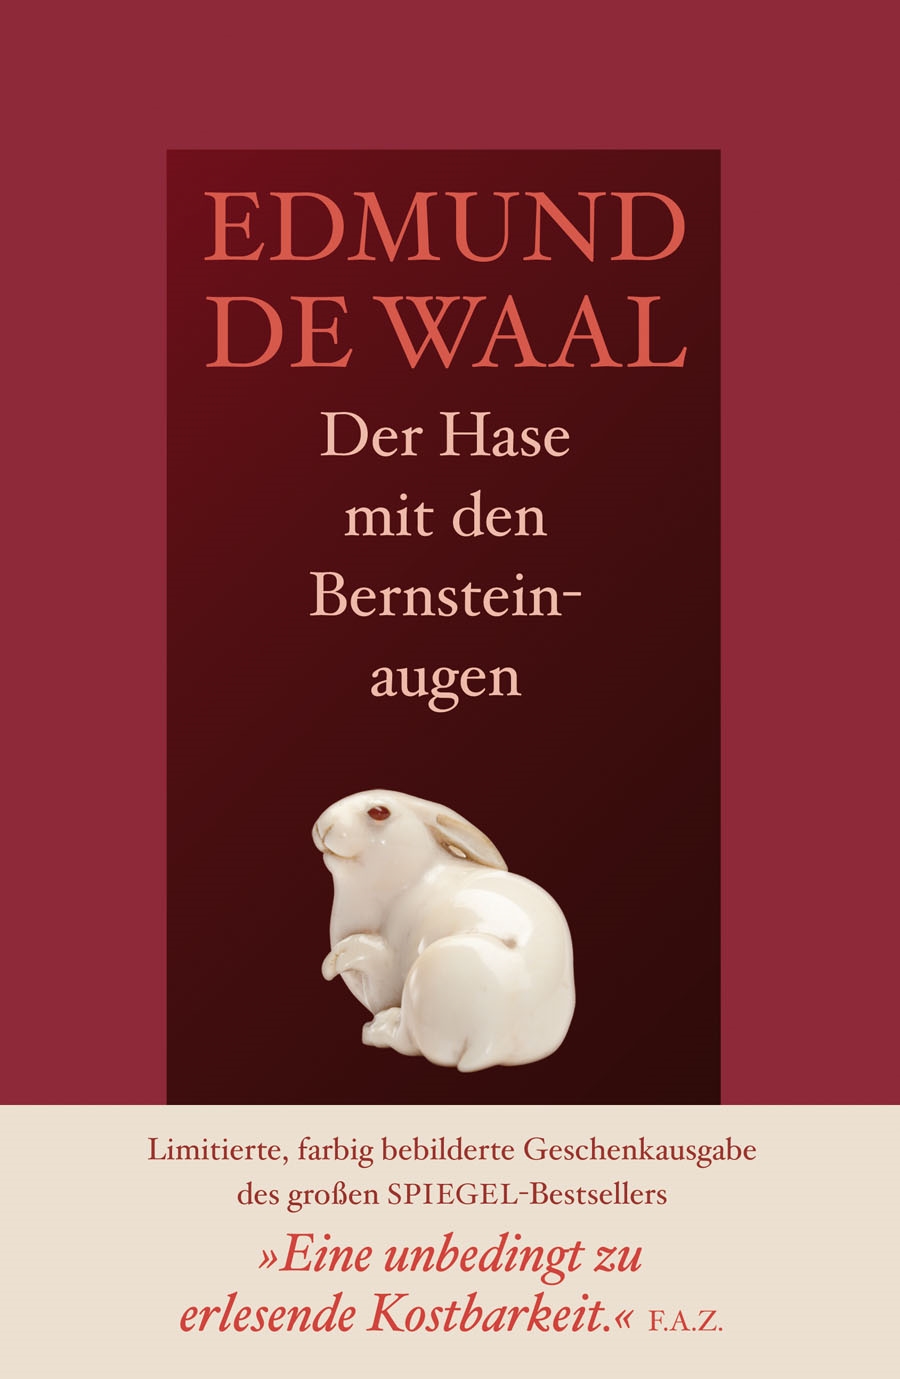 Де вааль книги. Edmund de Waal. Edmund de Waal: ten Thousand things text by Joan Simon.